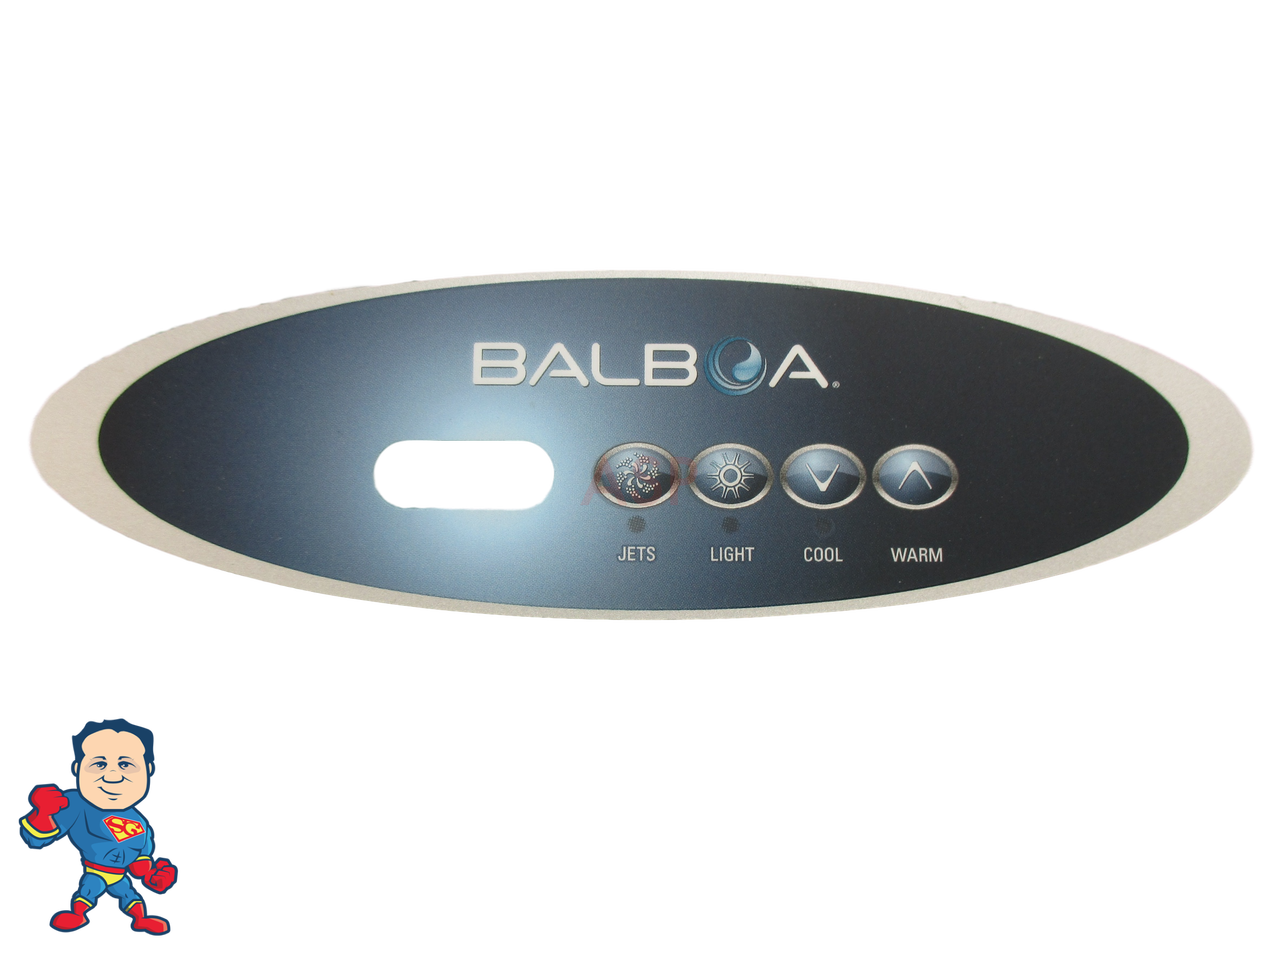 Balboa Overlay Balboa Topside 4 Button Spa Hot Tub 10307 VL404 E4 Duplex How To Video 